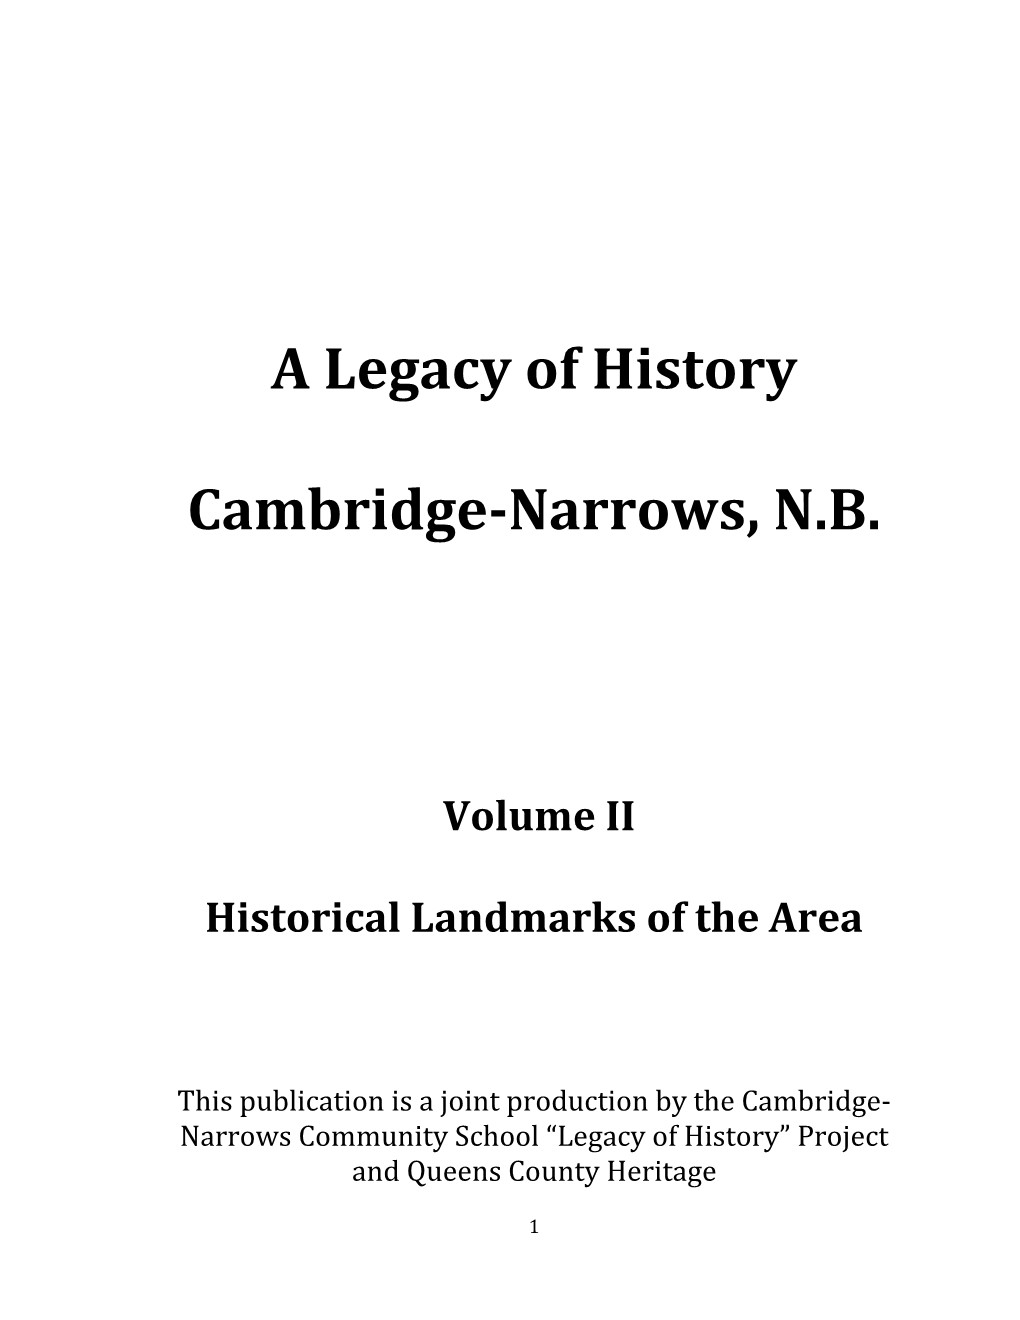 A Legacy of History Cambridge-Narrows, N.B